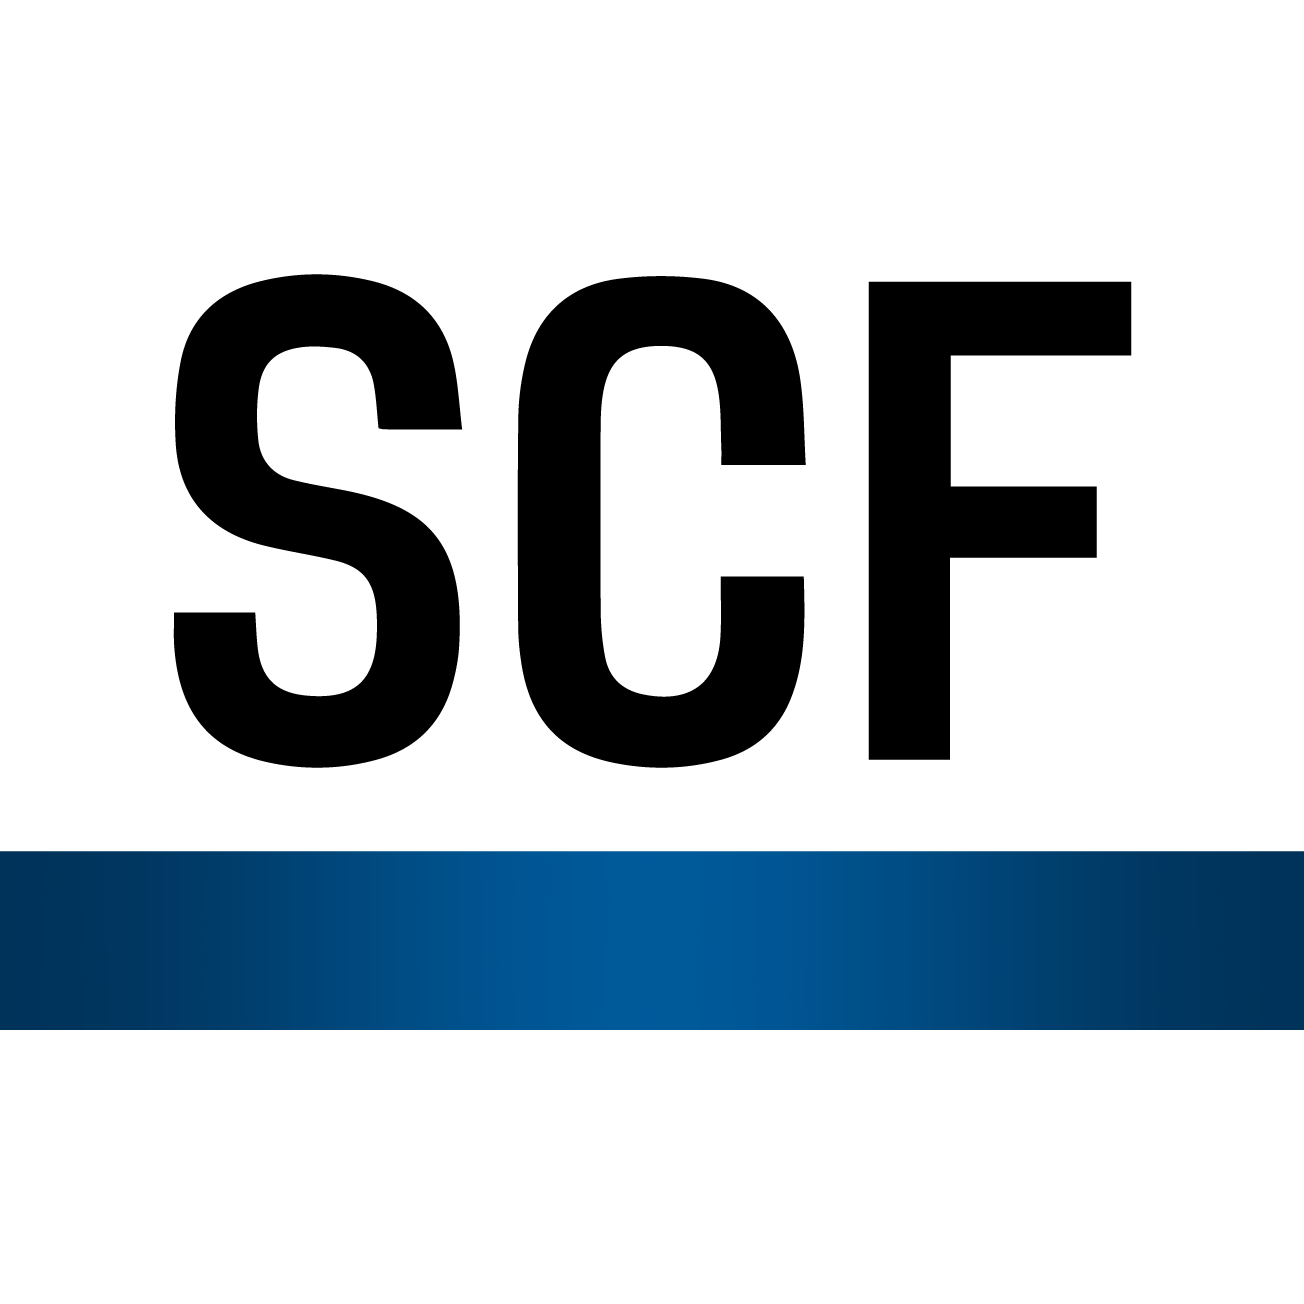 Club Image for SCF